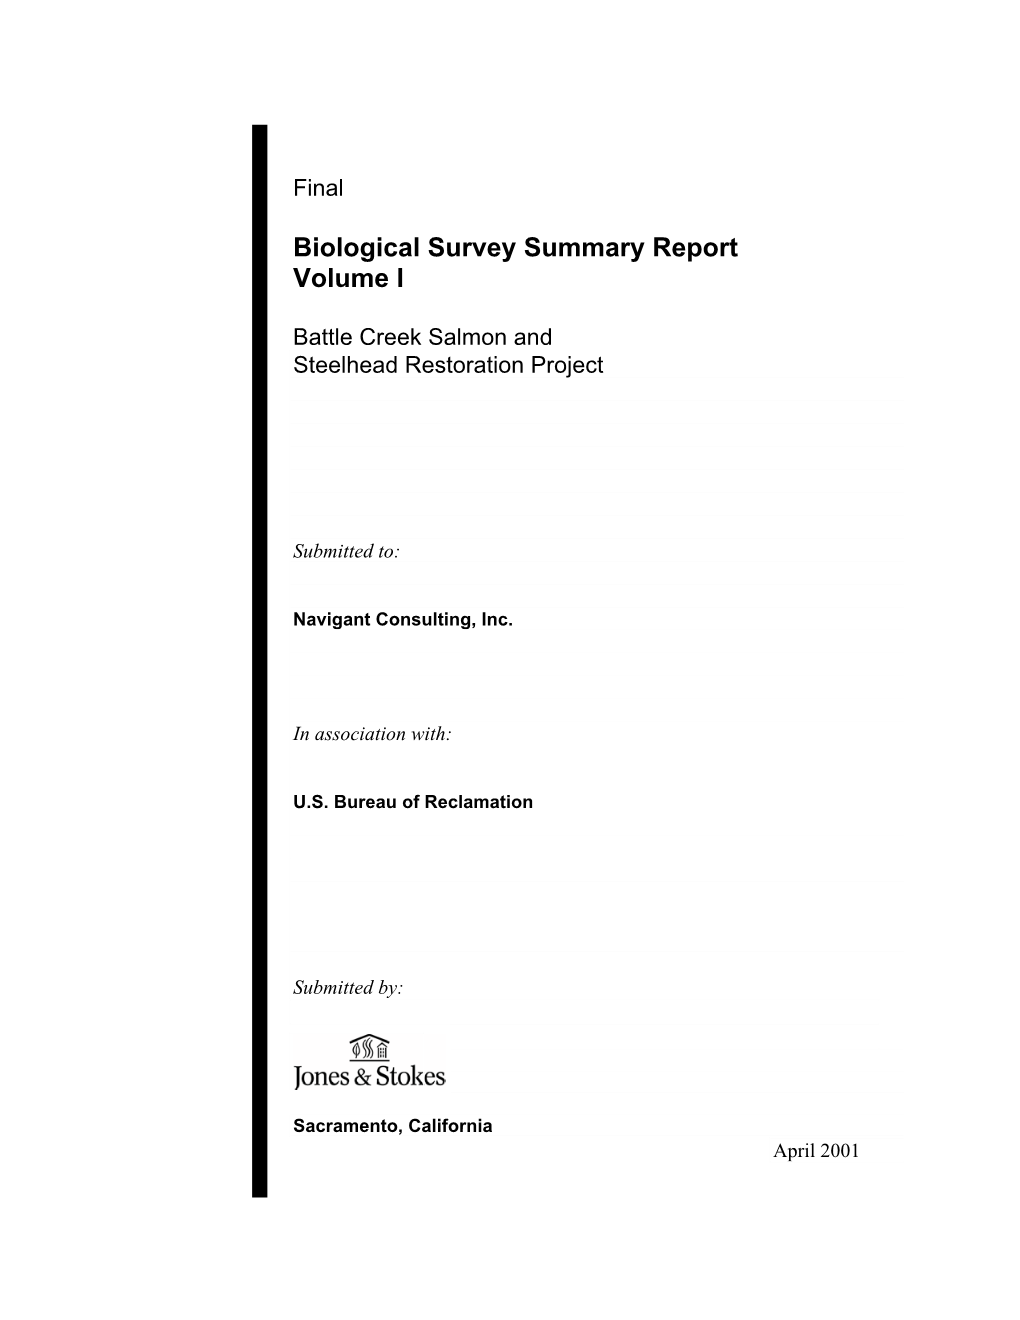 Biological Survey Summary Report Volume I